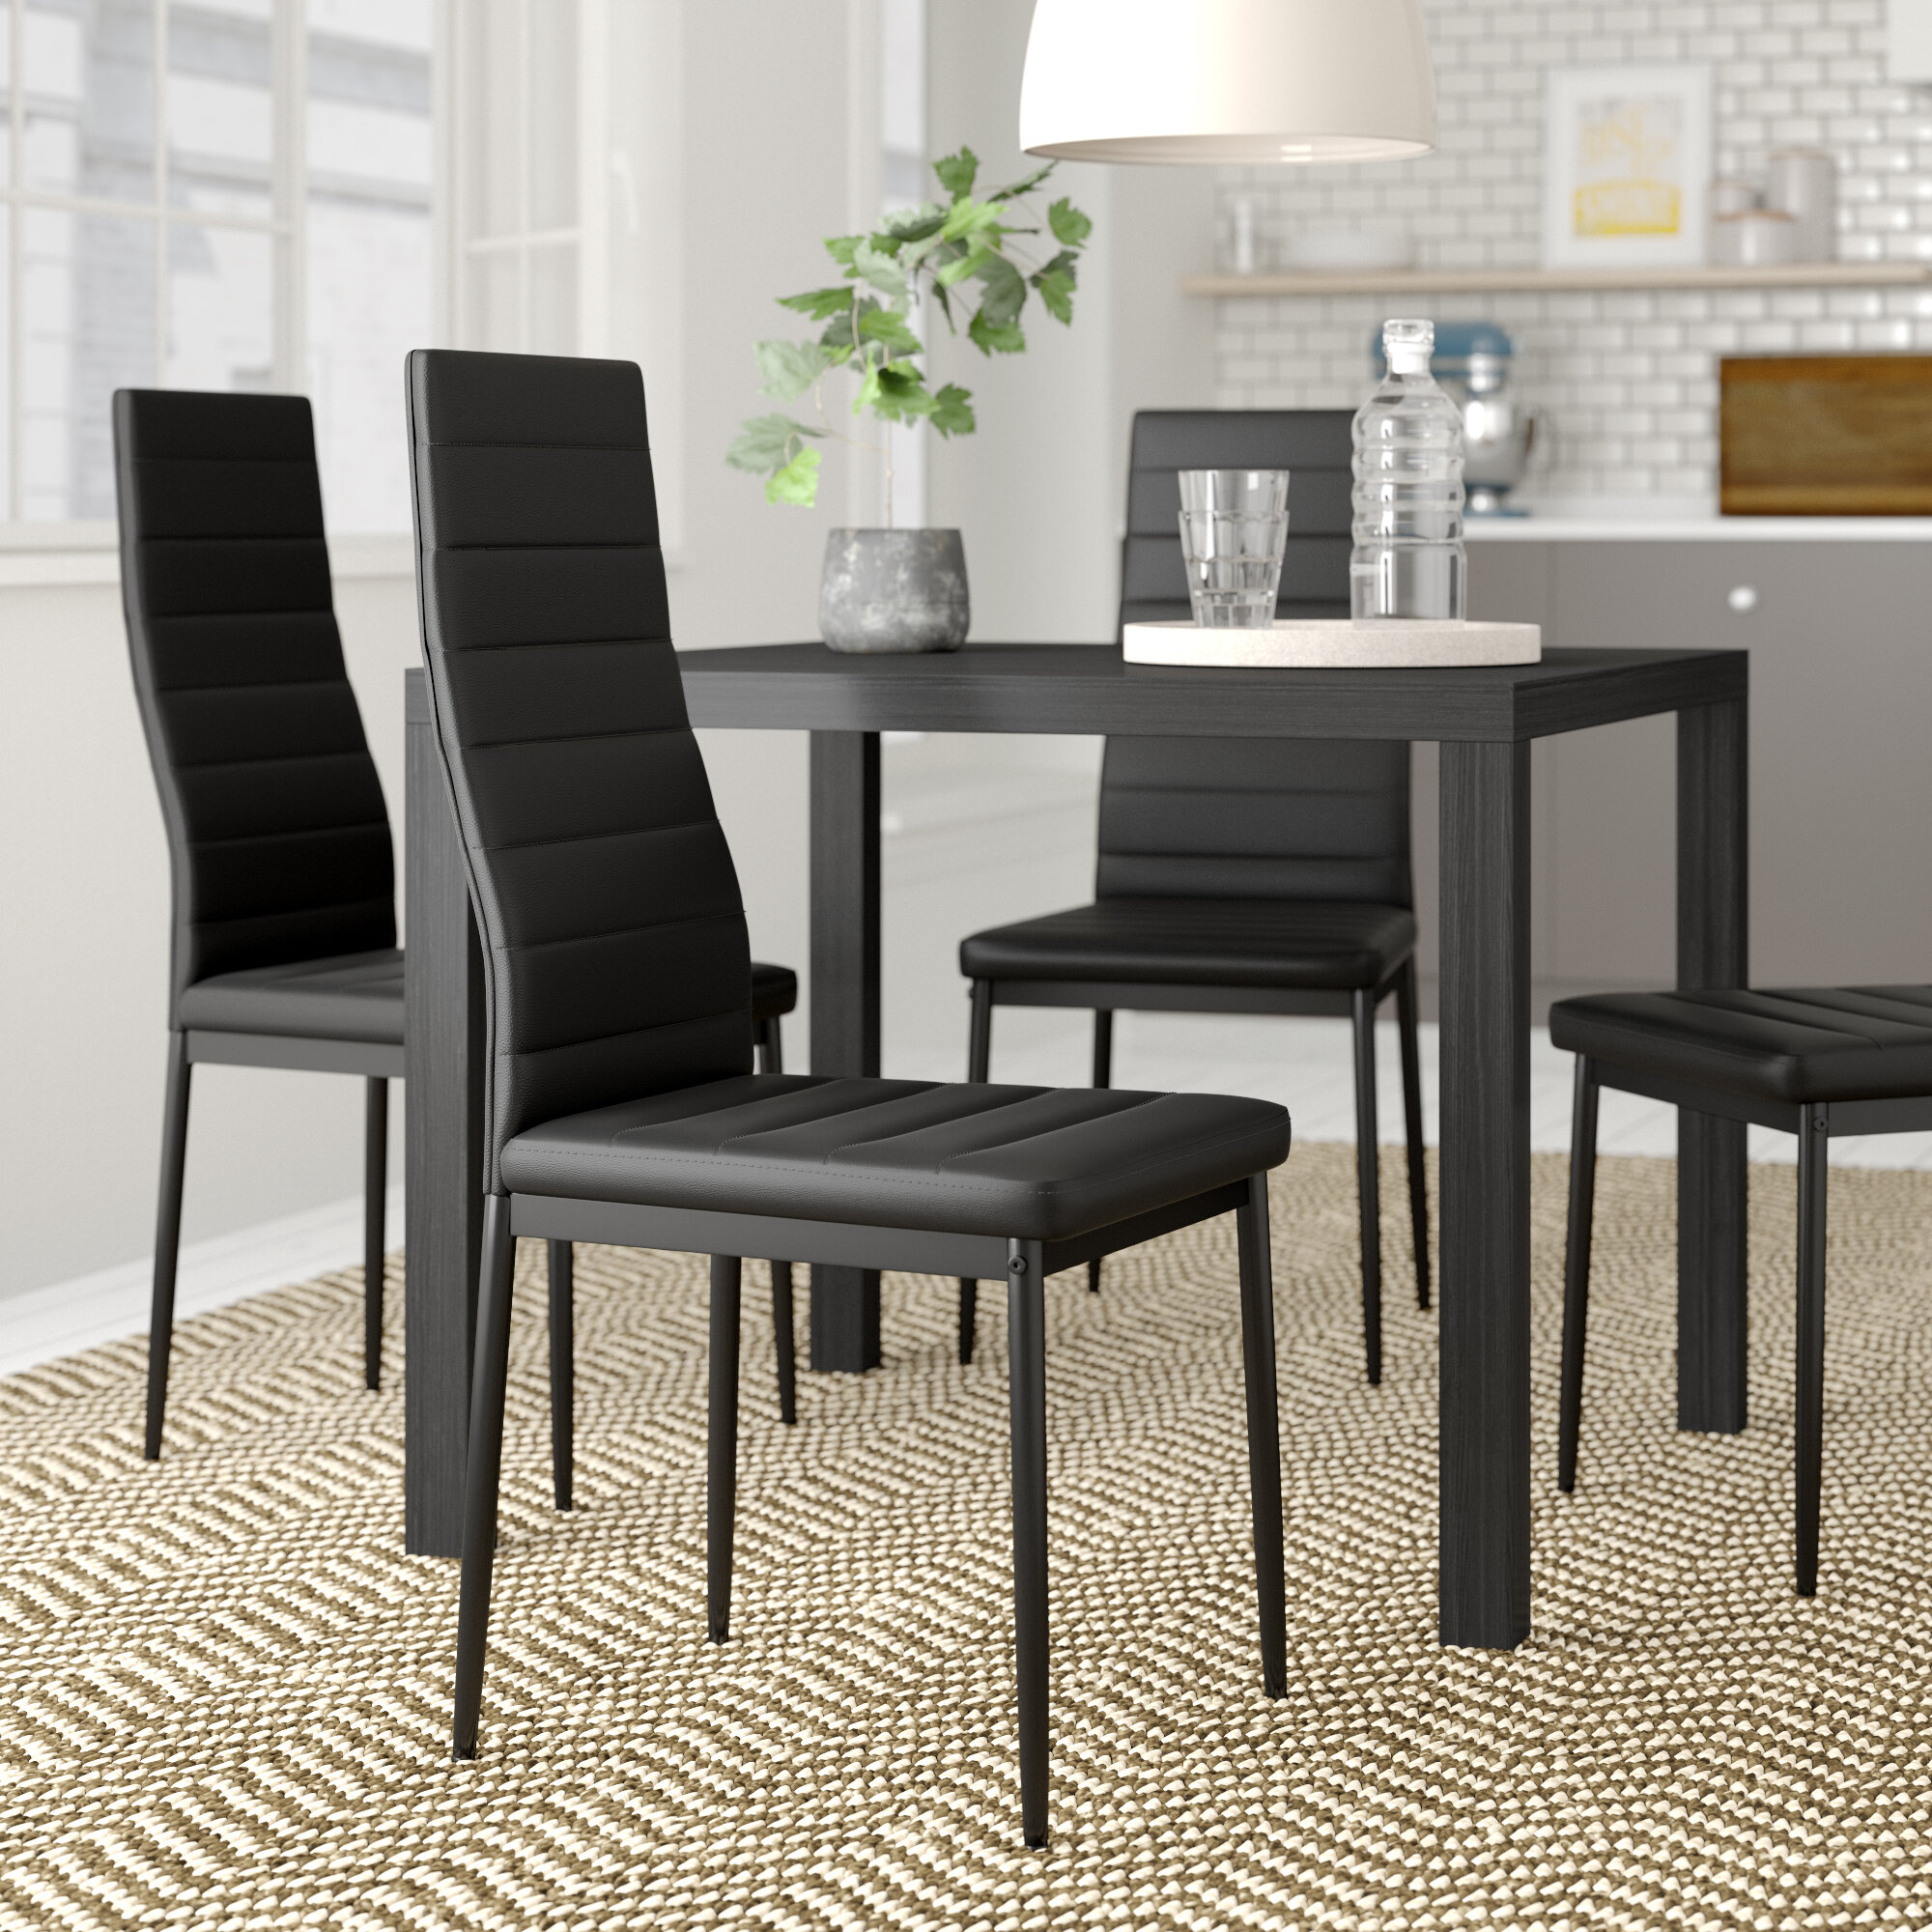 Zipcode Design Gisselle Upholstered Dining Chair Reviews Wayfair